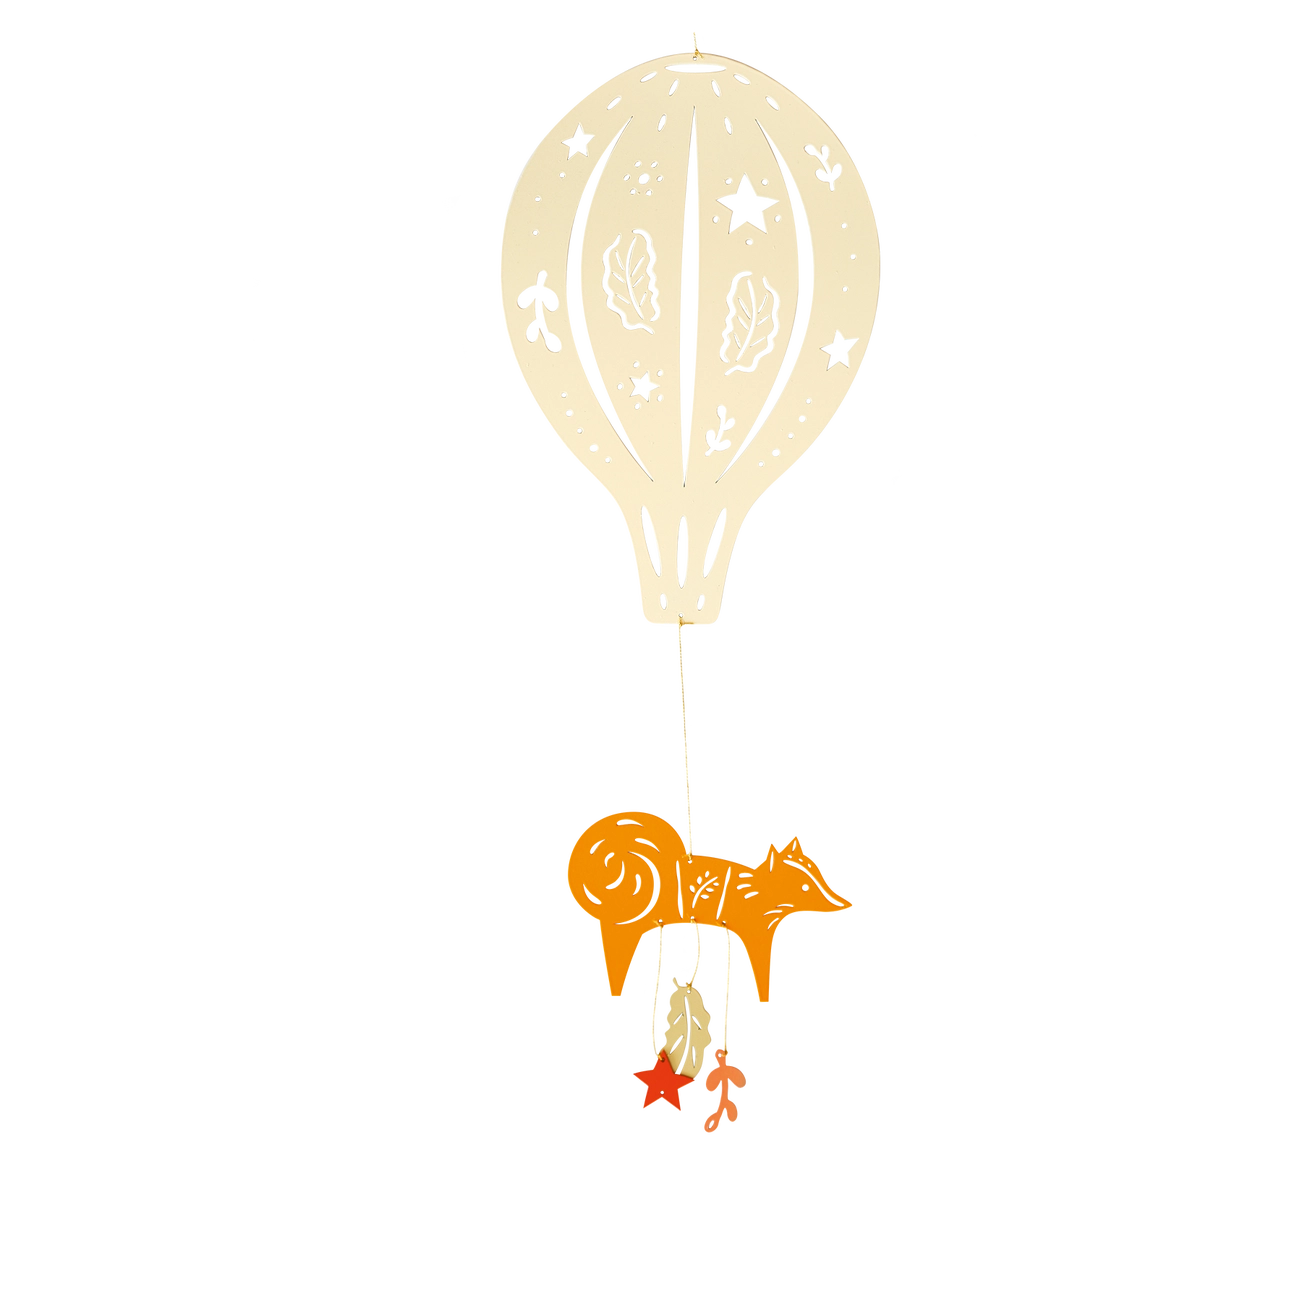 Hot Air Balloon Mobile